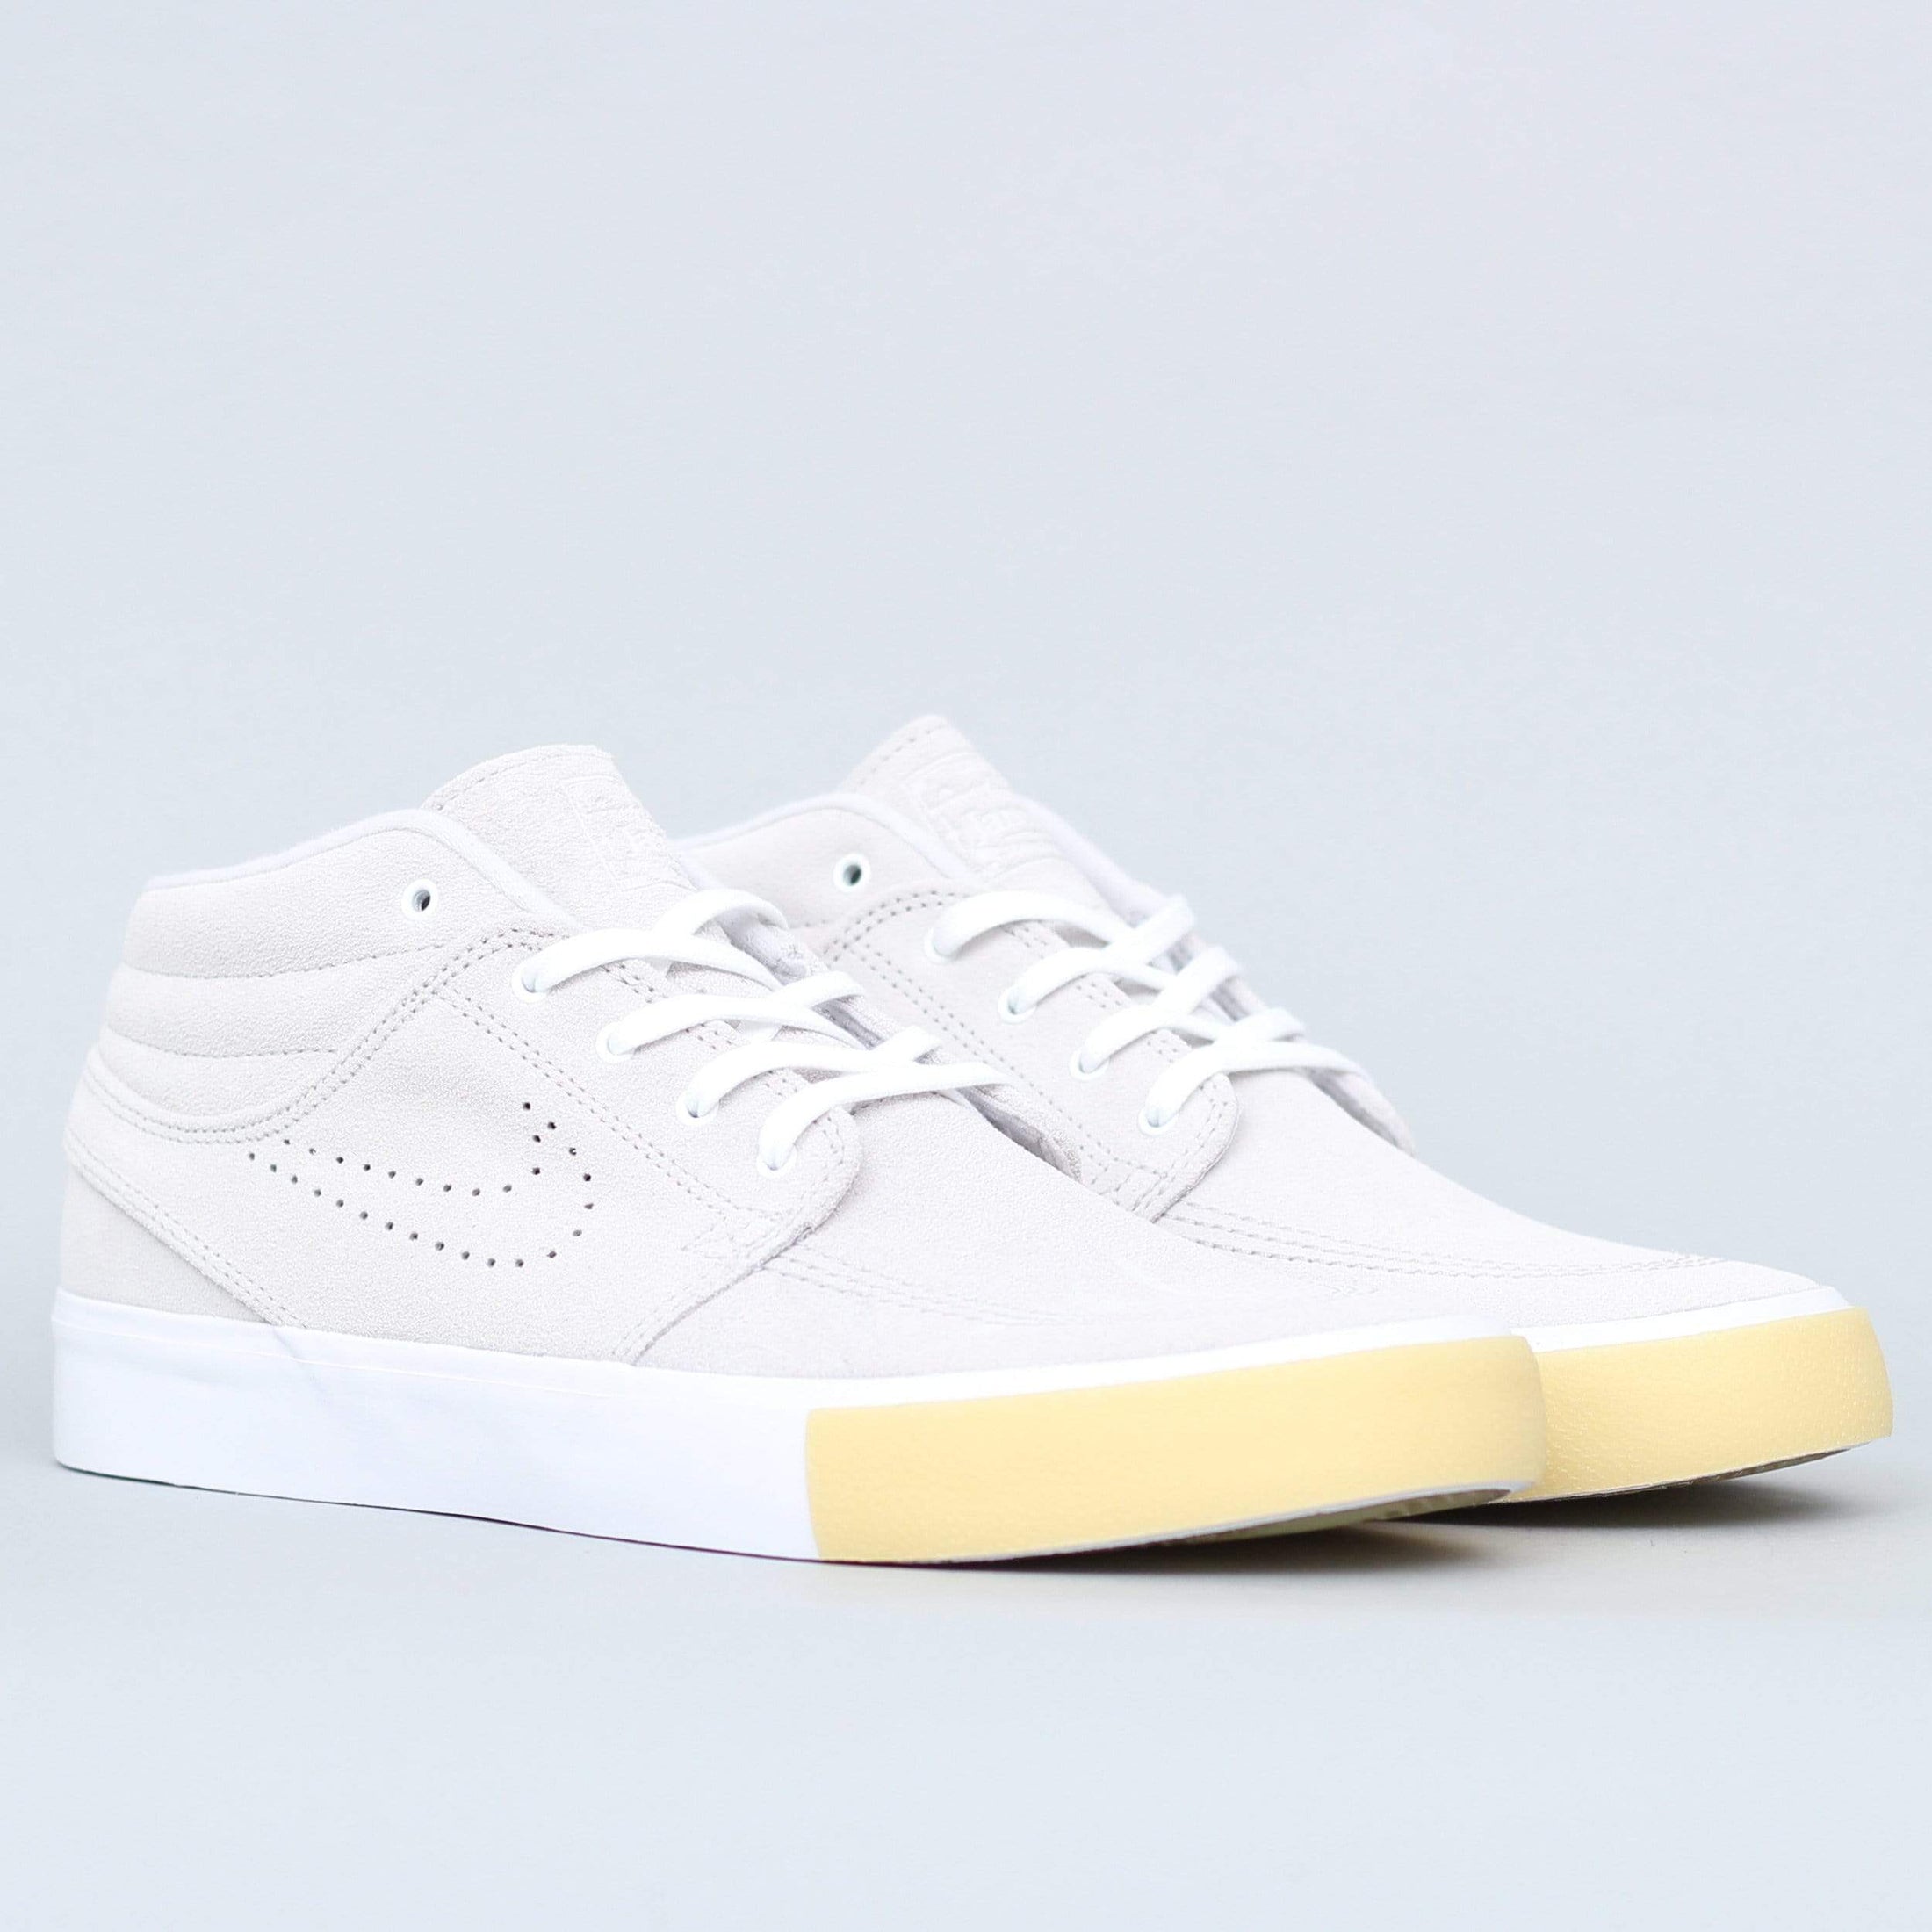 Nike SB Janoski Mid RM SE Shoes White / Vast Grey / Gum Yellow / White